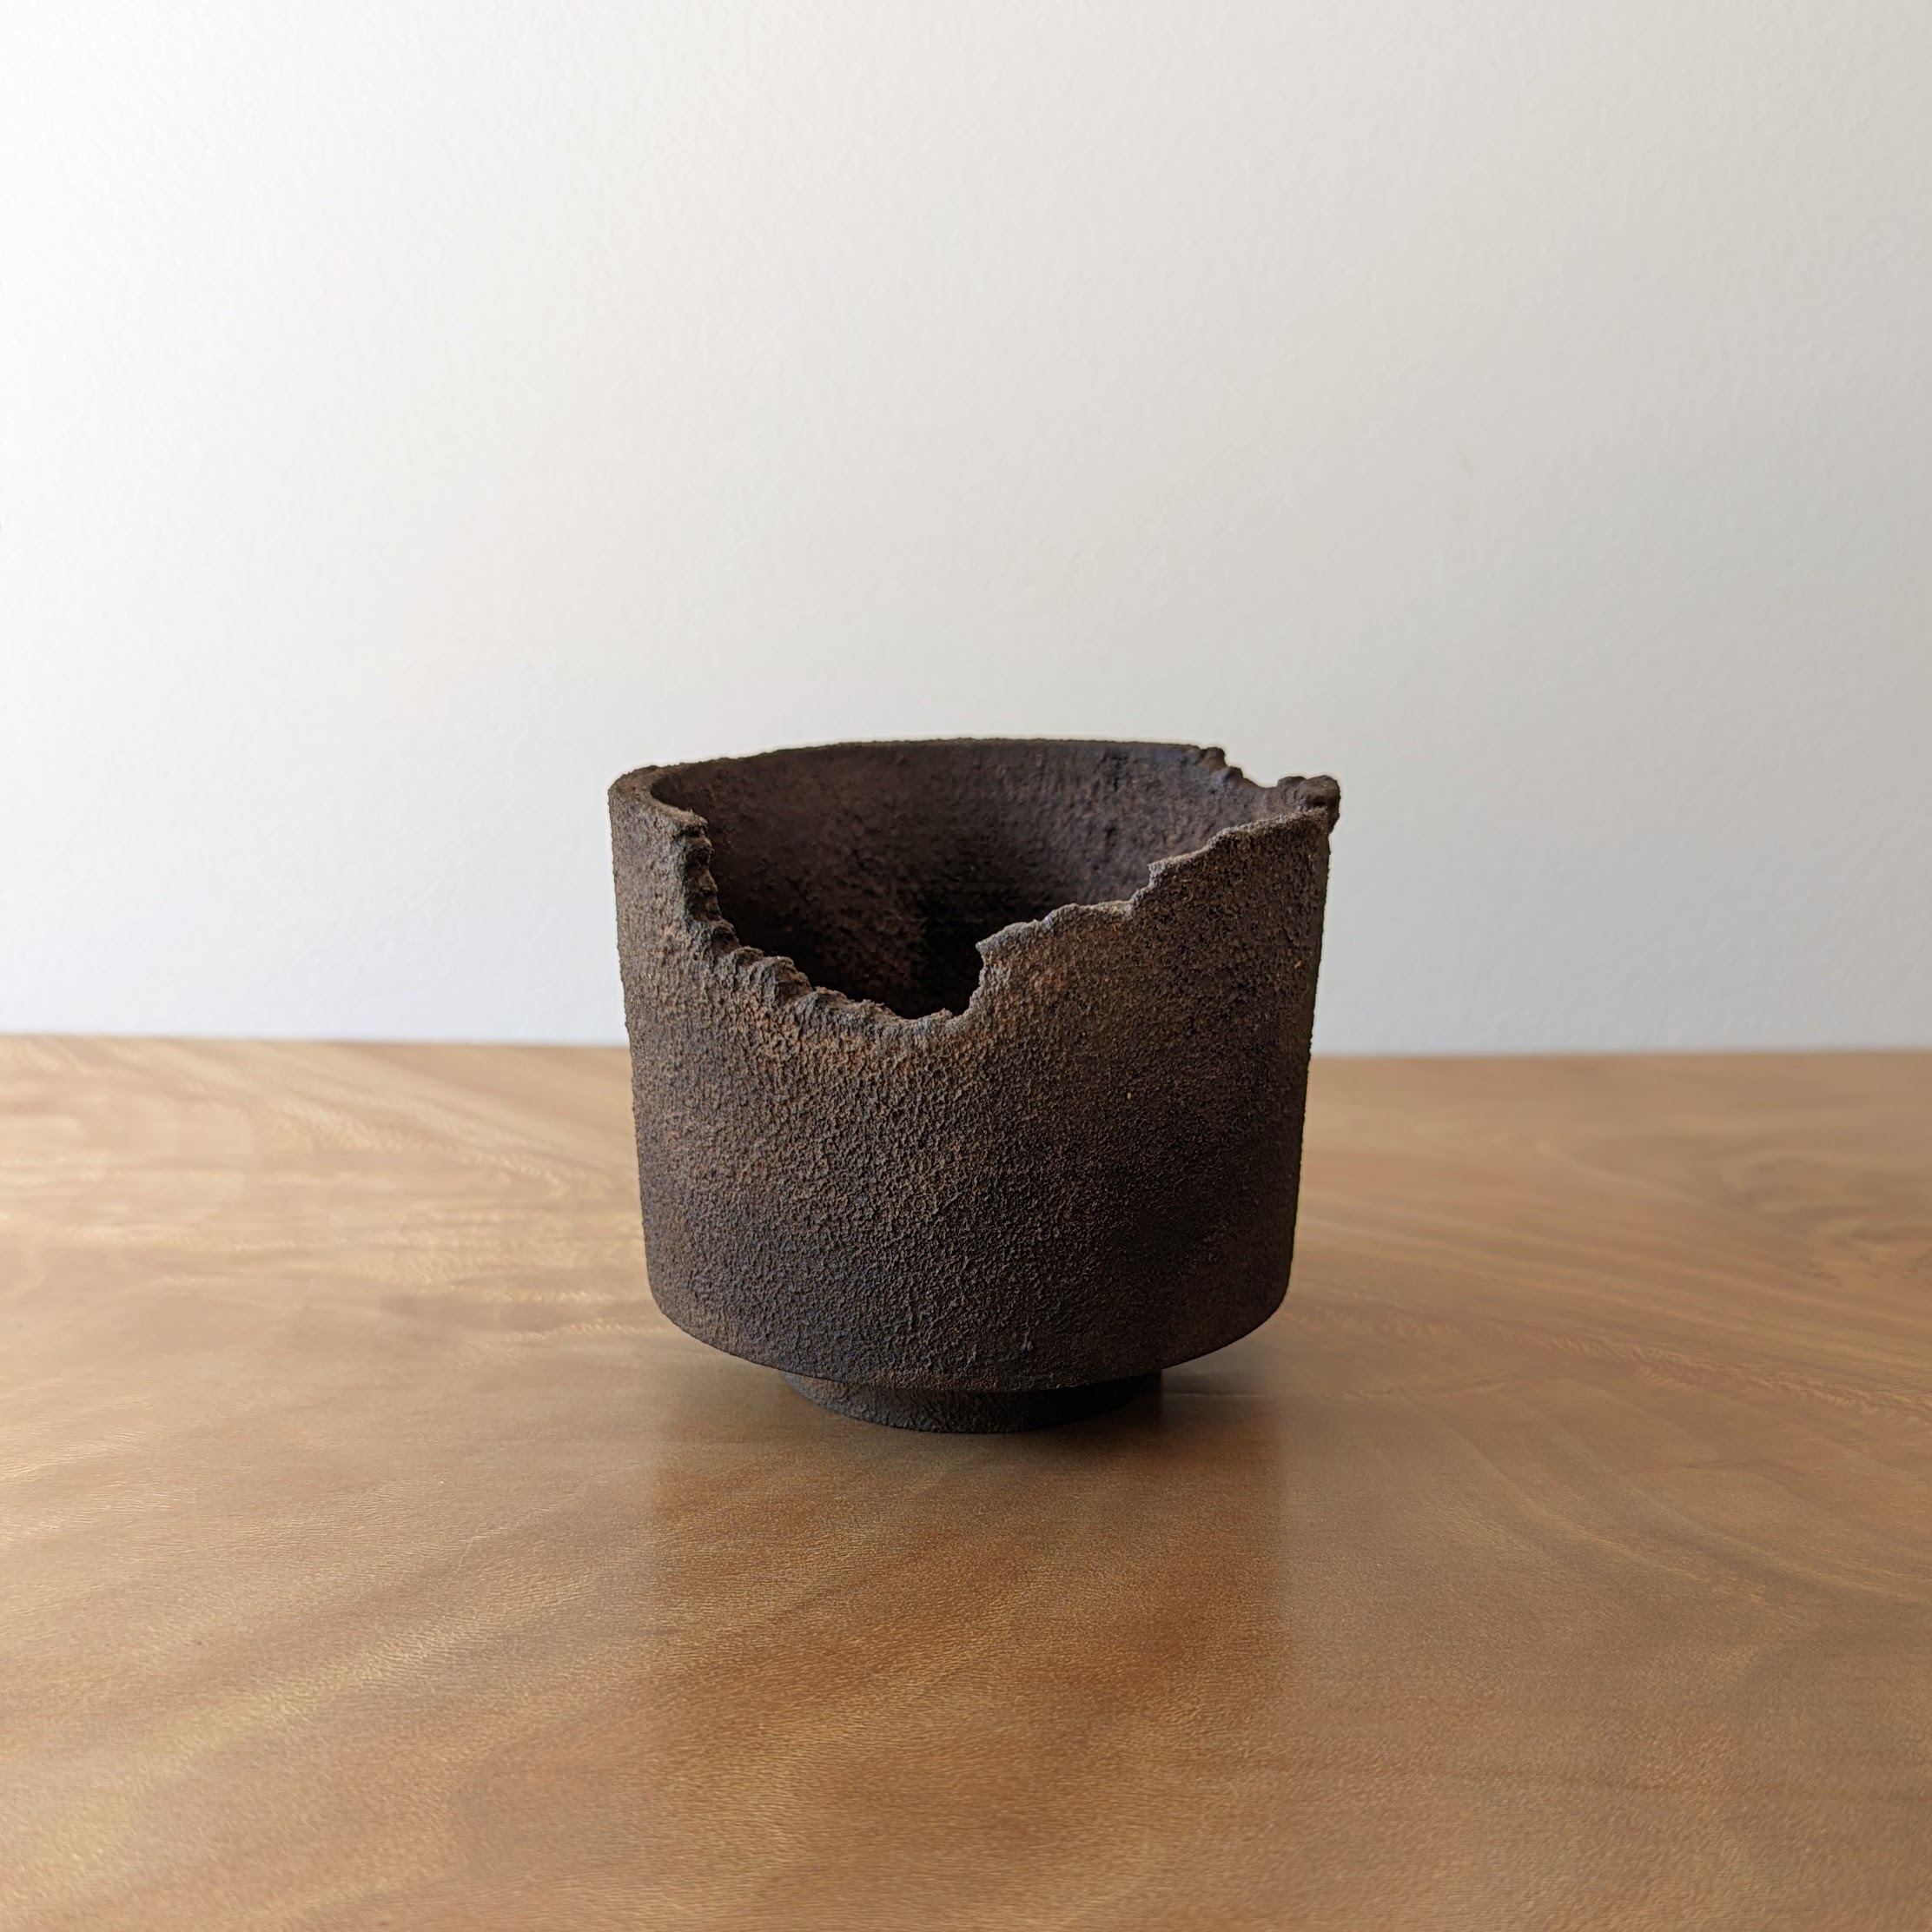 Small dark wooden vessel